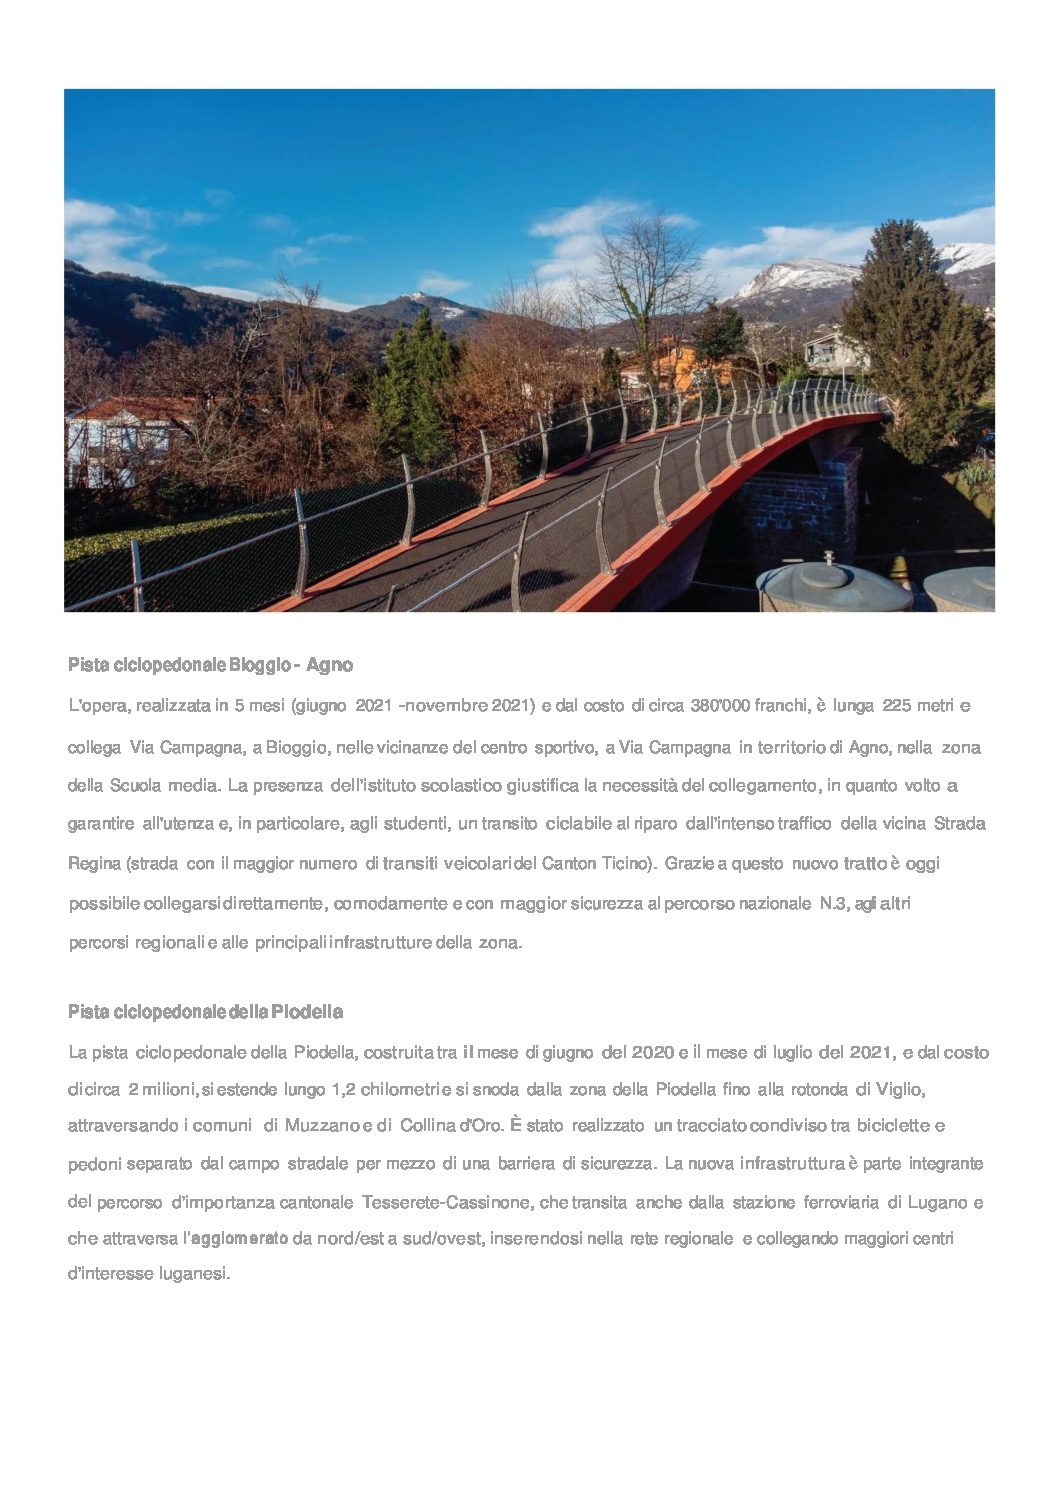 Ticino news, 13.12.2021